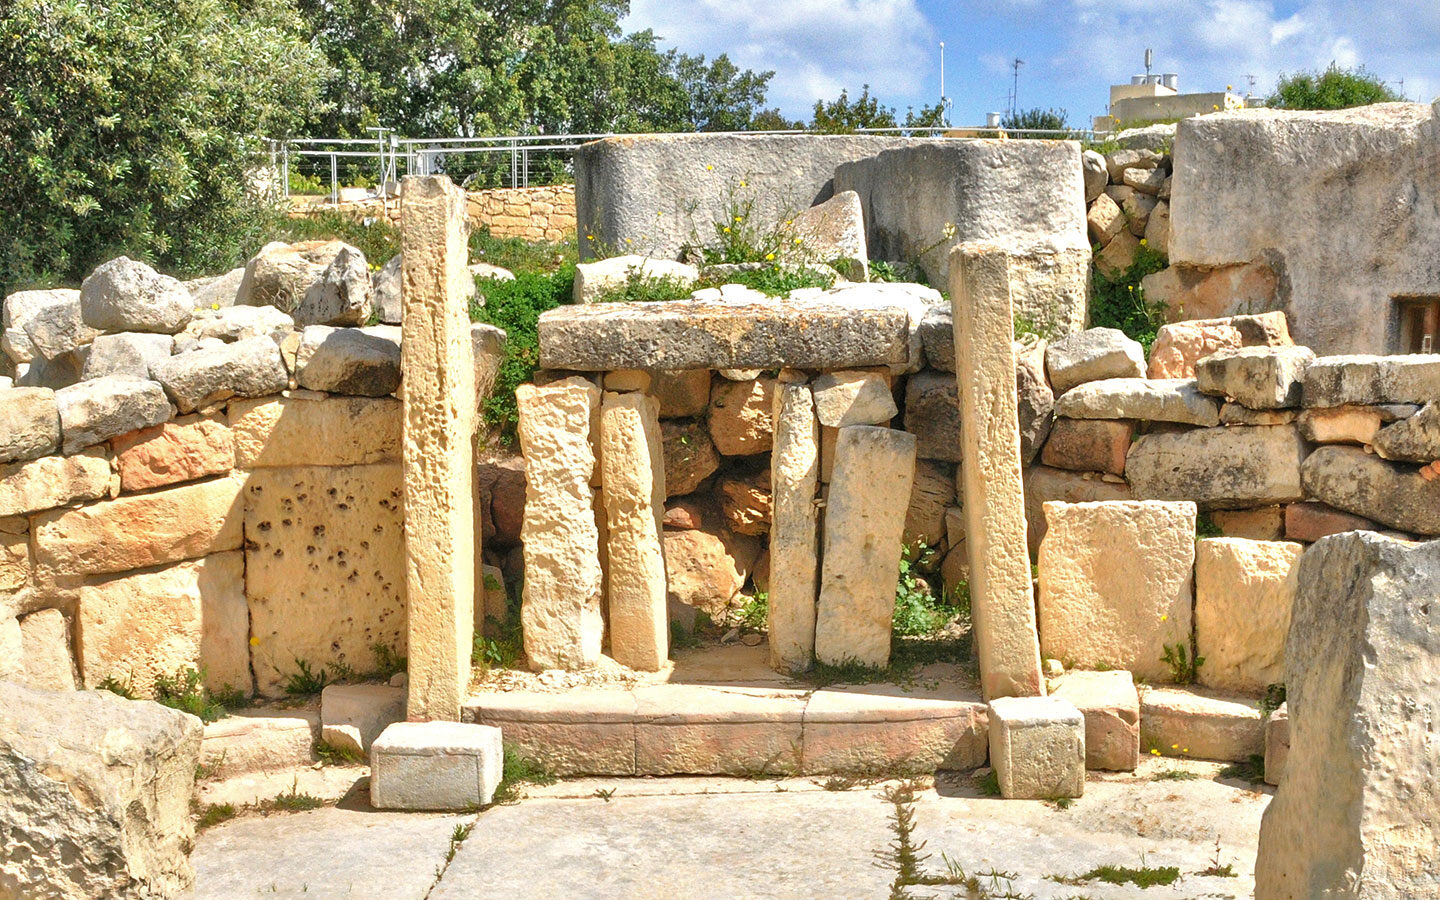 The Tarxien Temples in Malta